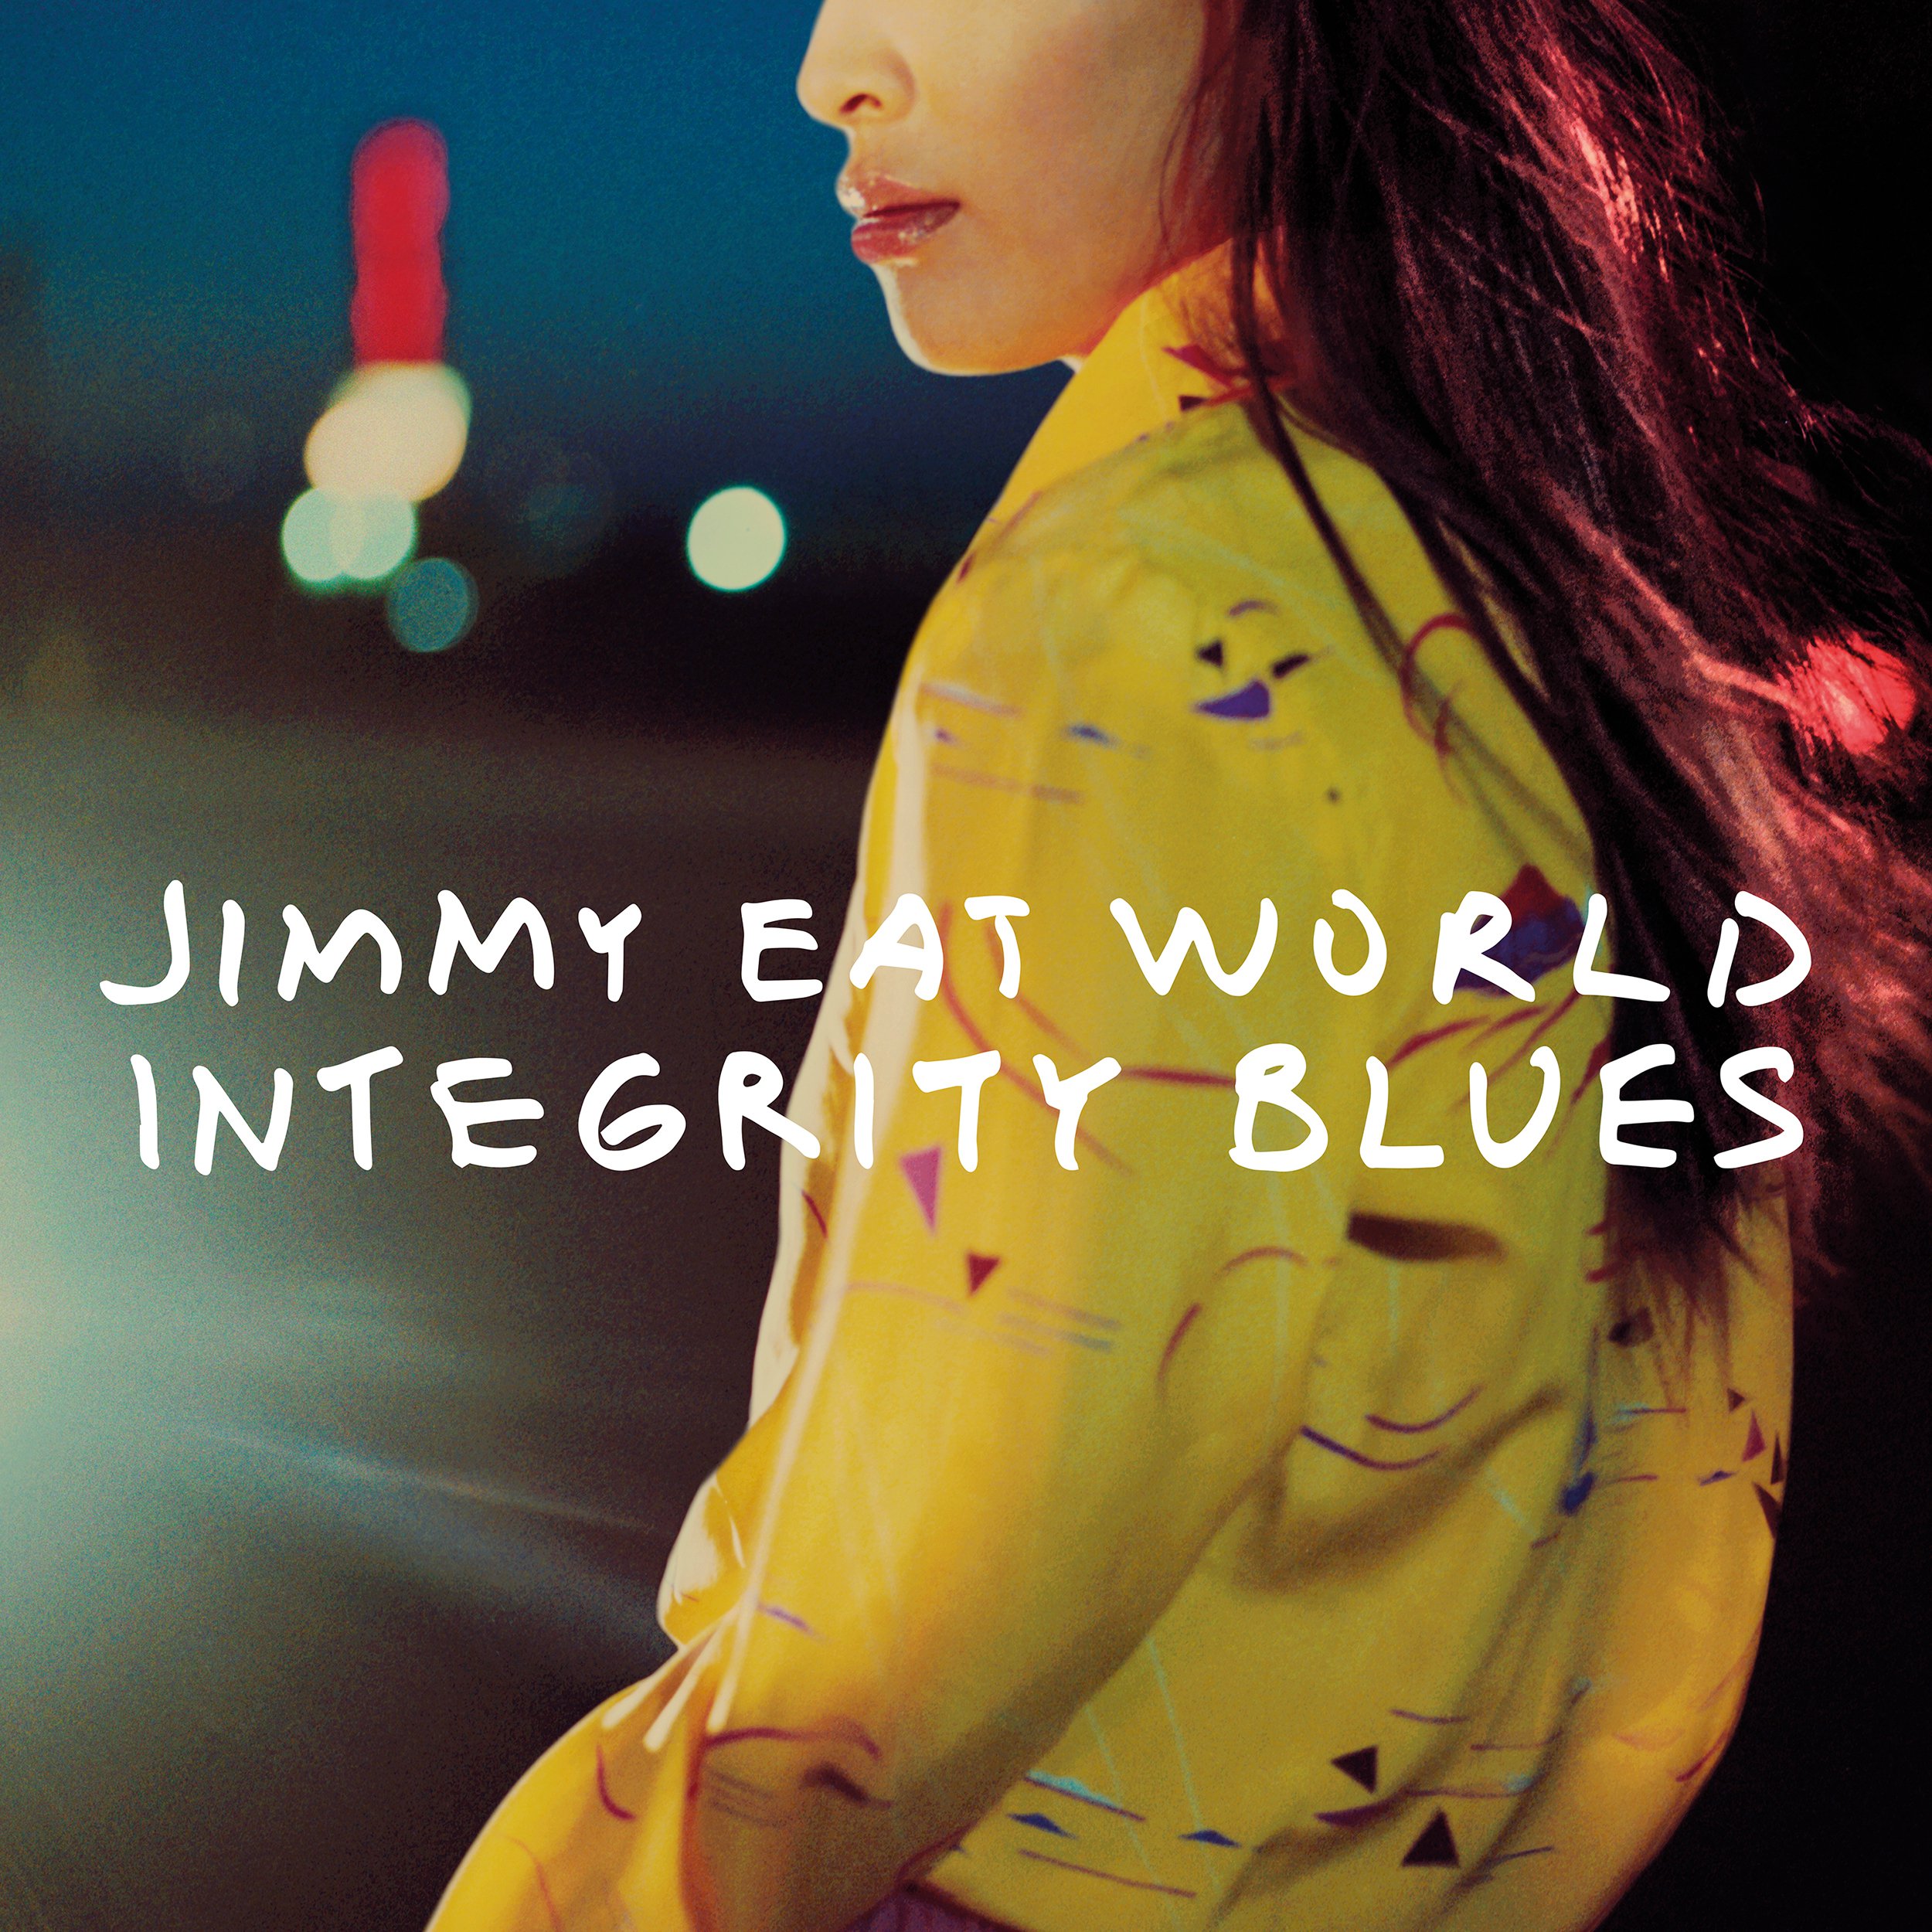 Jimmy Eat World - Integrity Blues (2016) [HDTracks FLAC 24bit/96kHz]